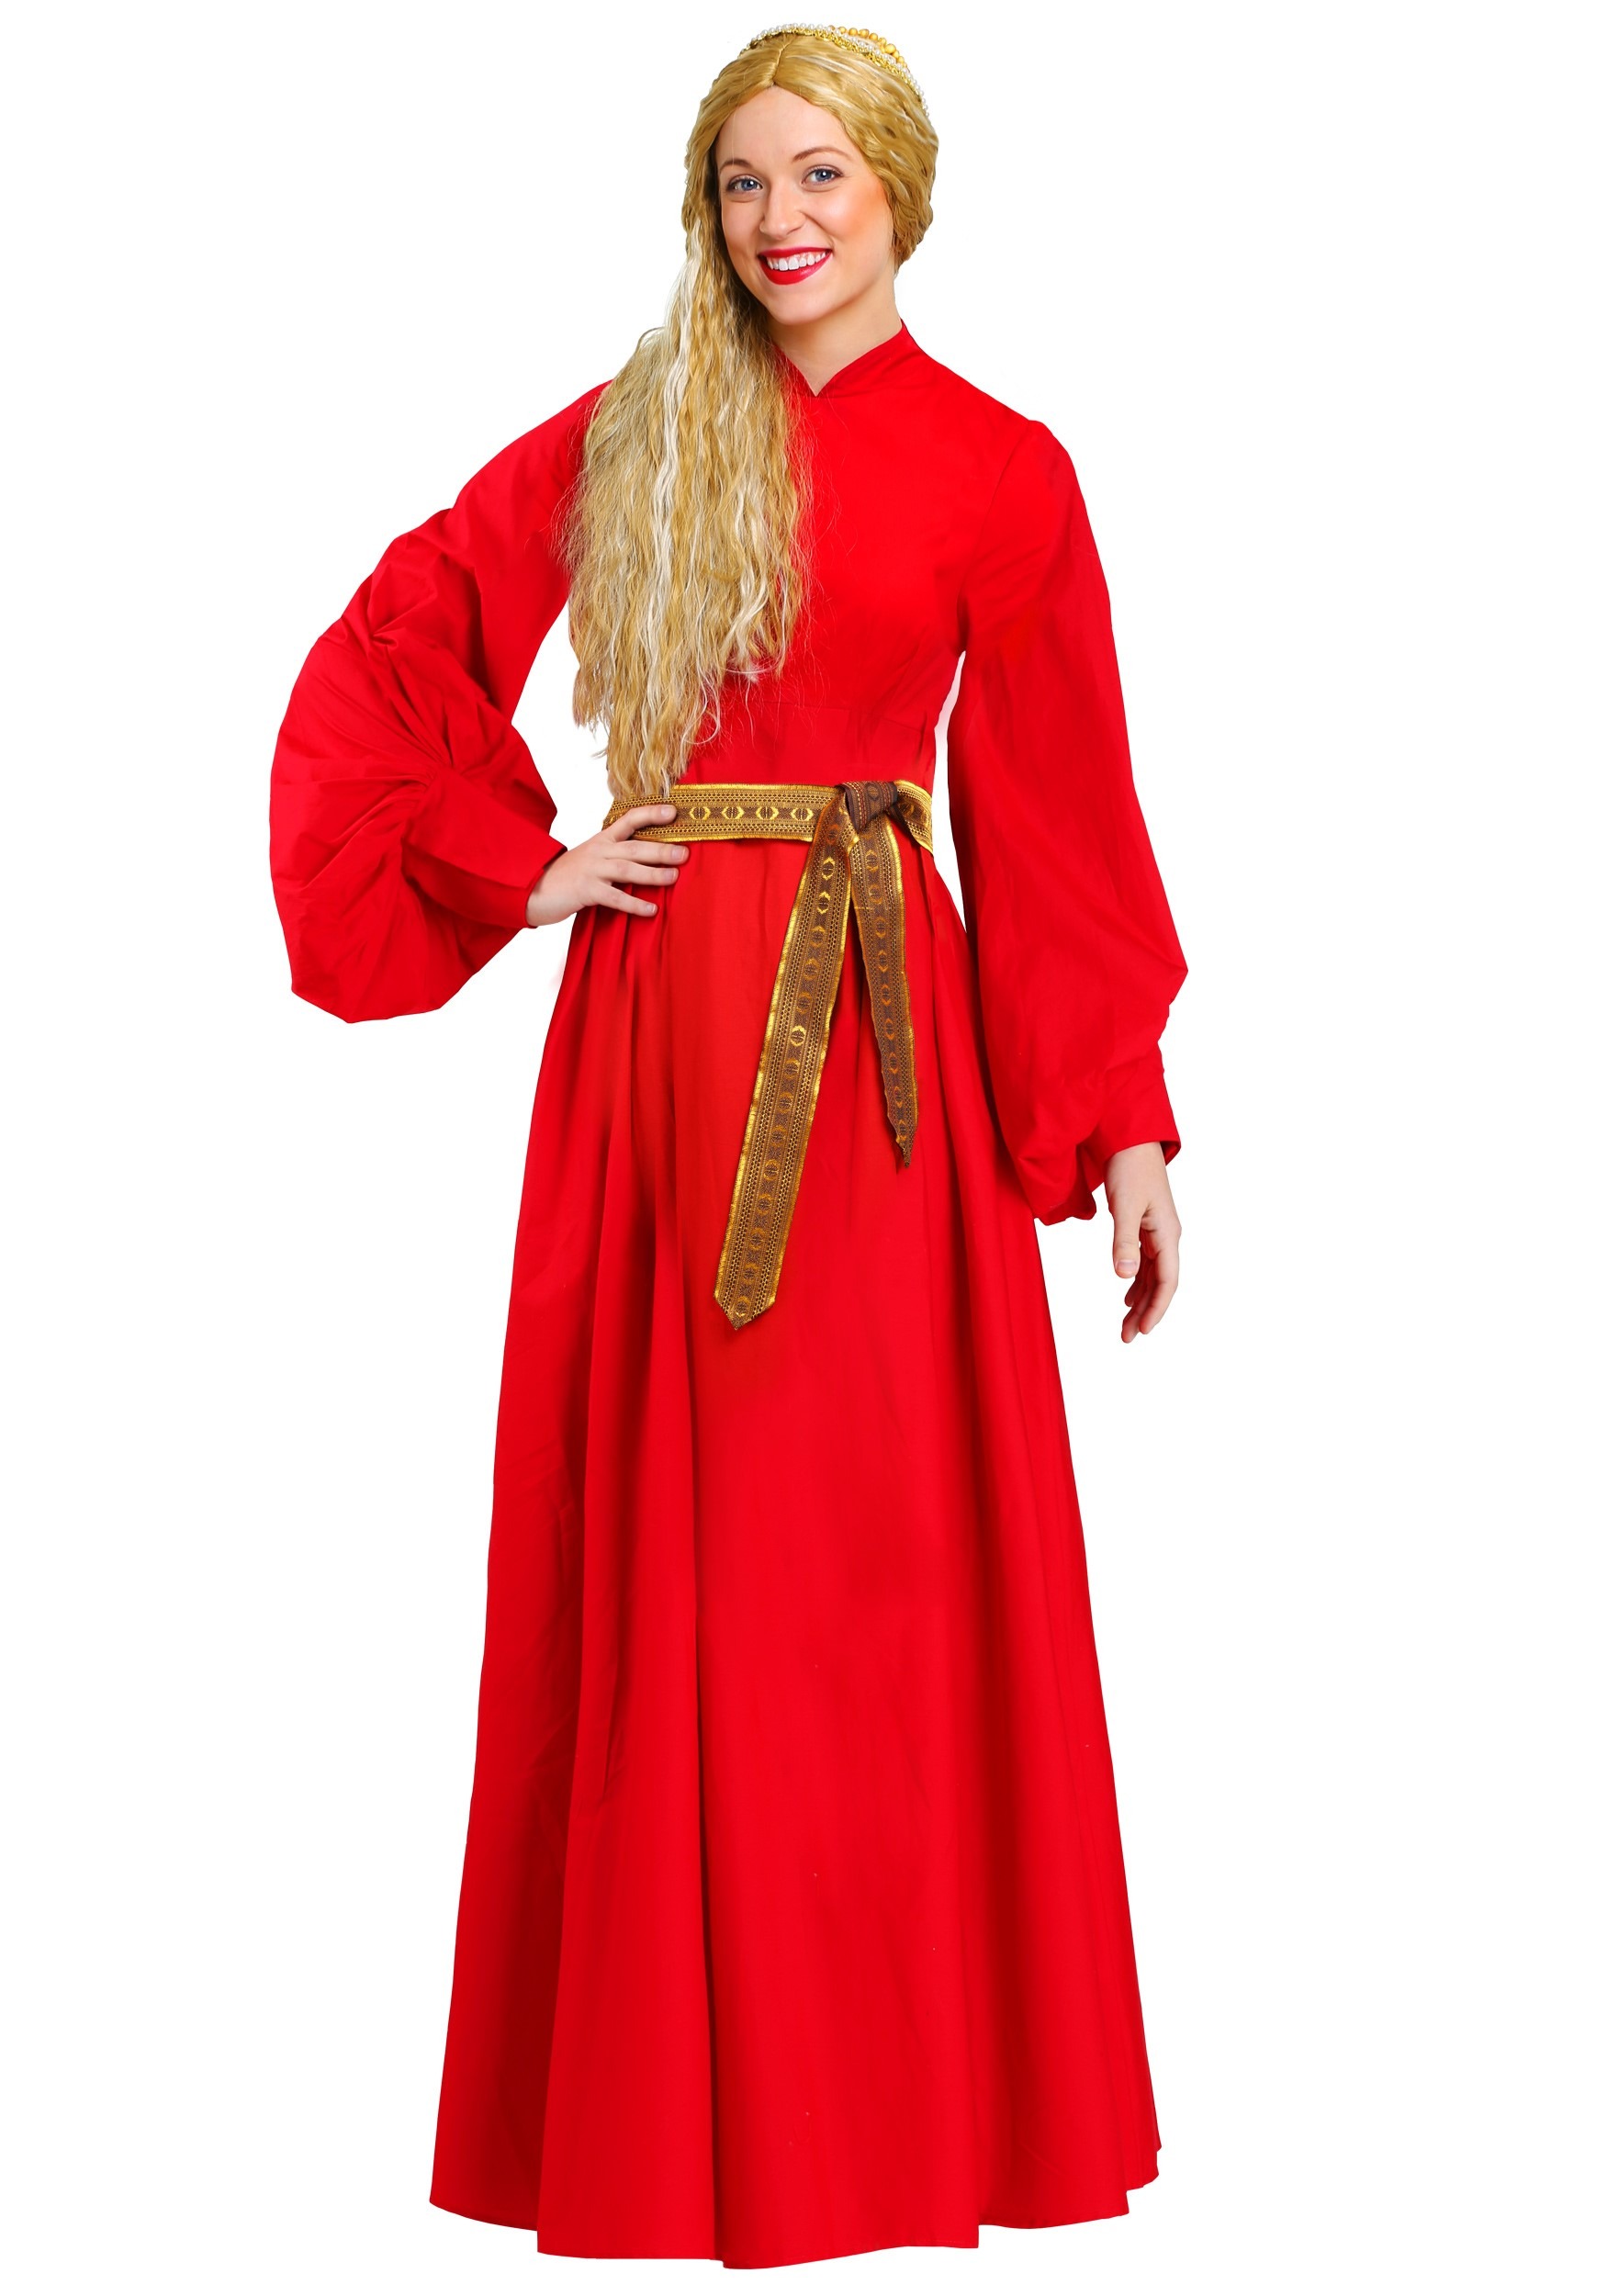 Image of FUN Costumes Plus Size Women's Buttercup Peasant Costume Dress | Plus Size Costumes